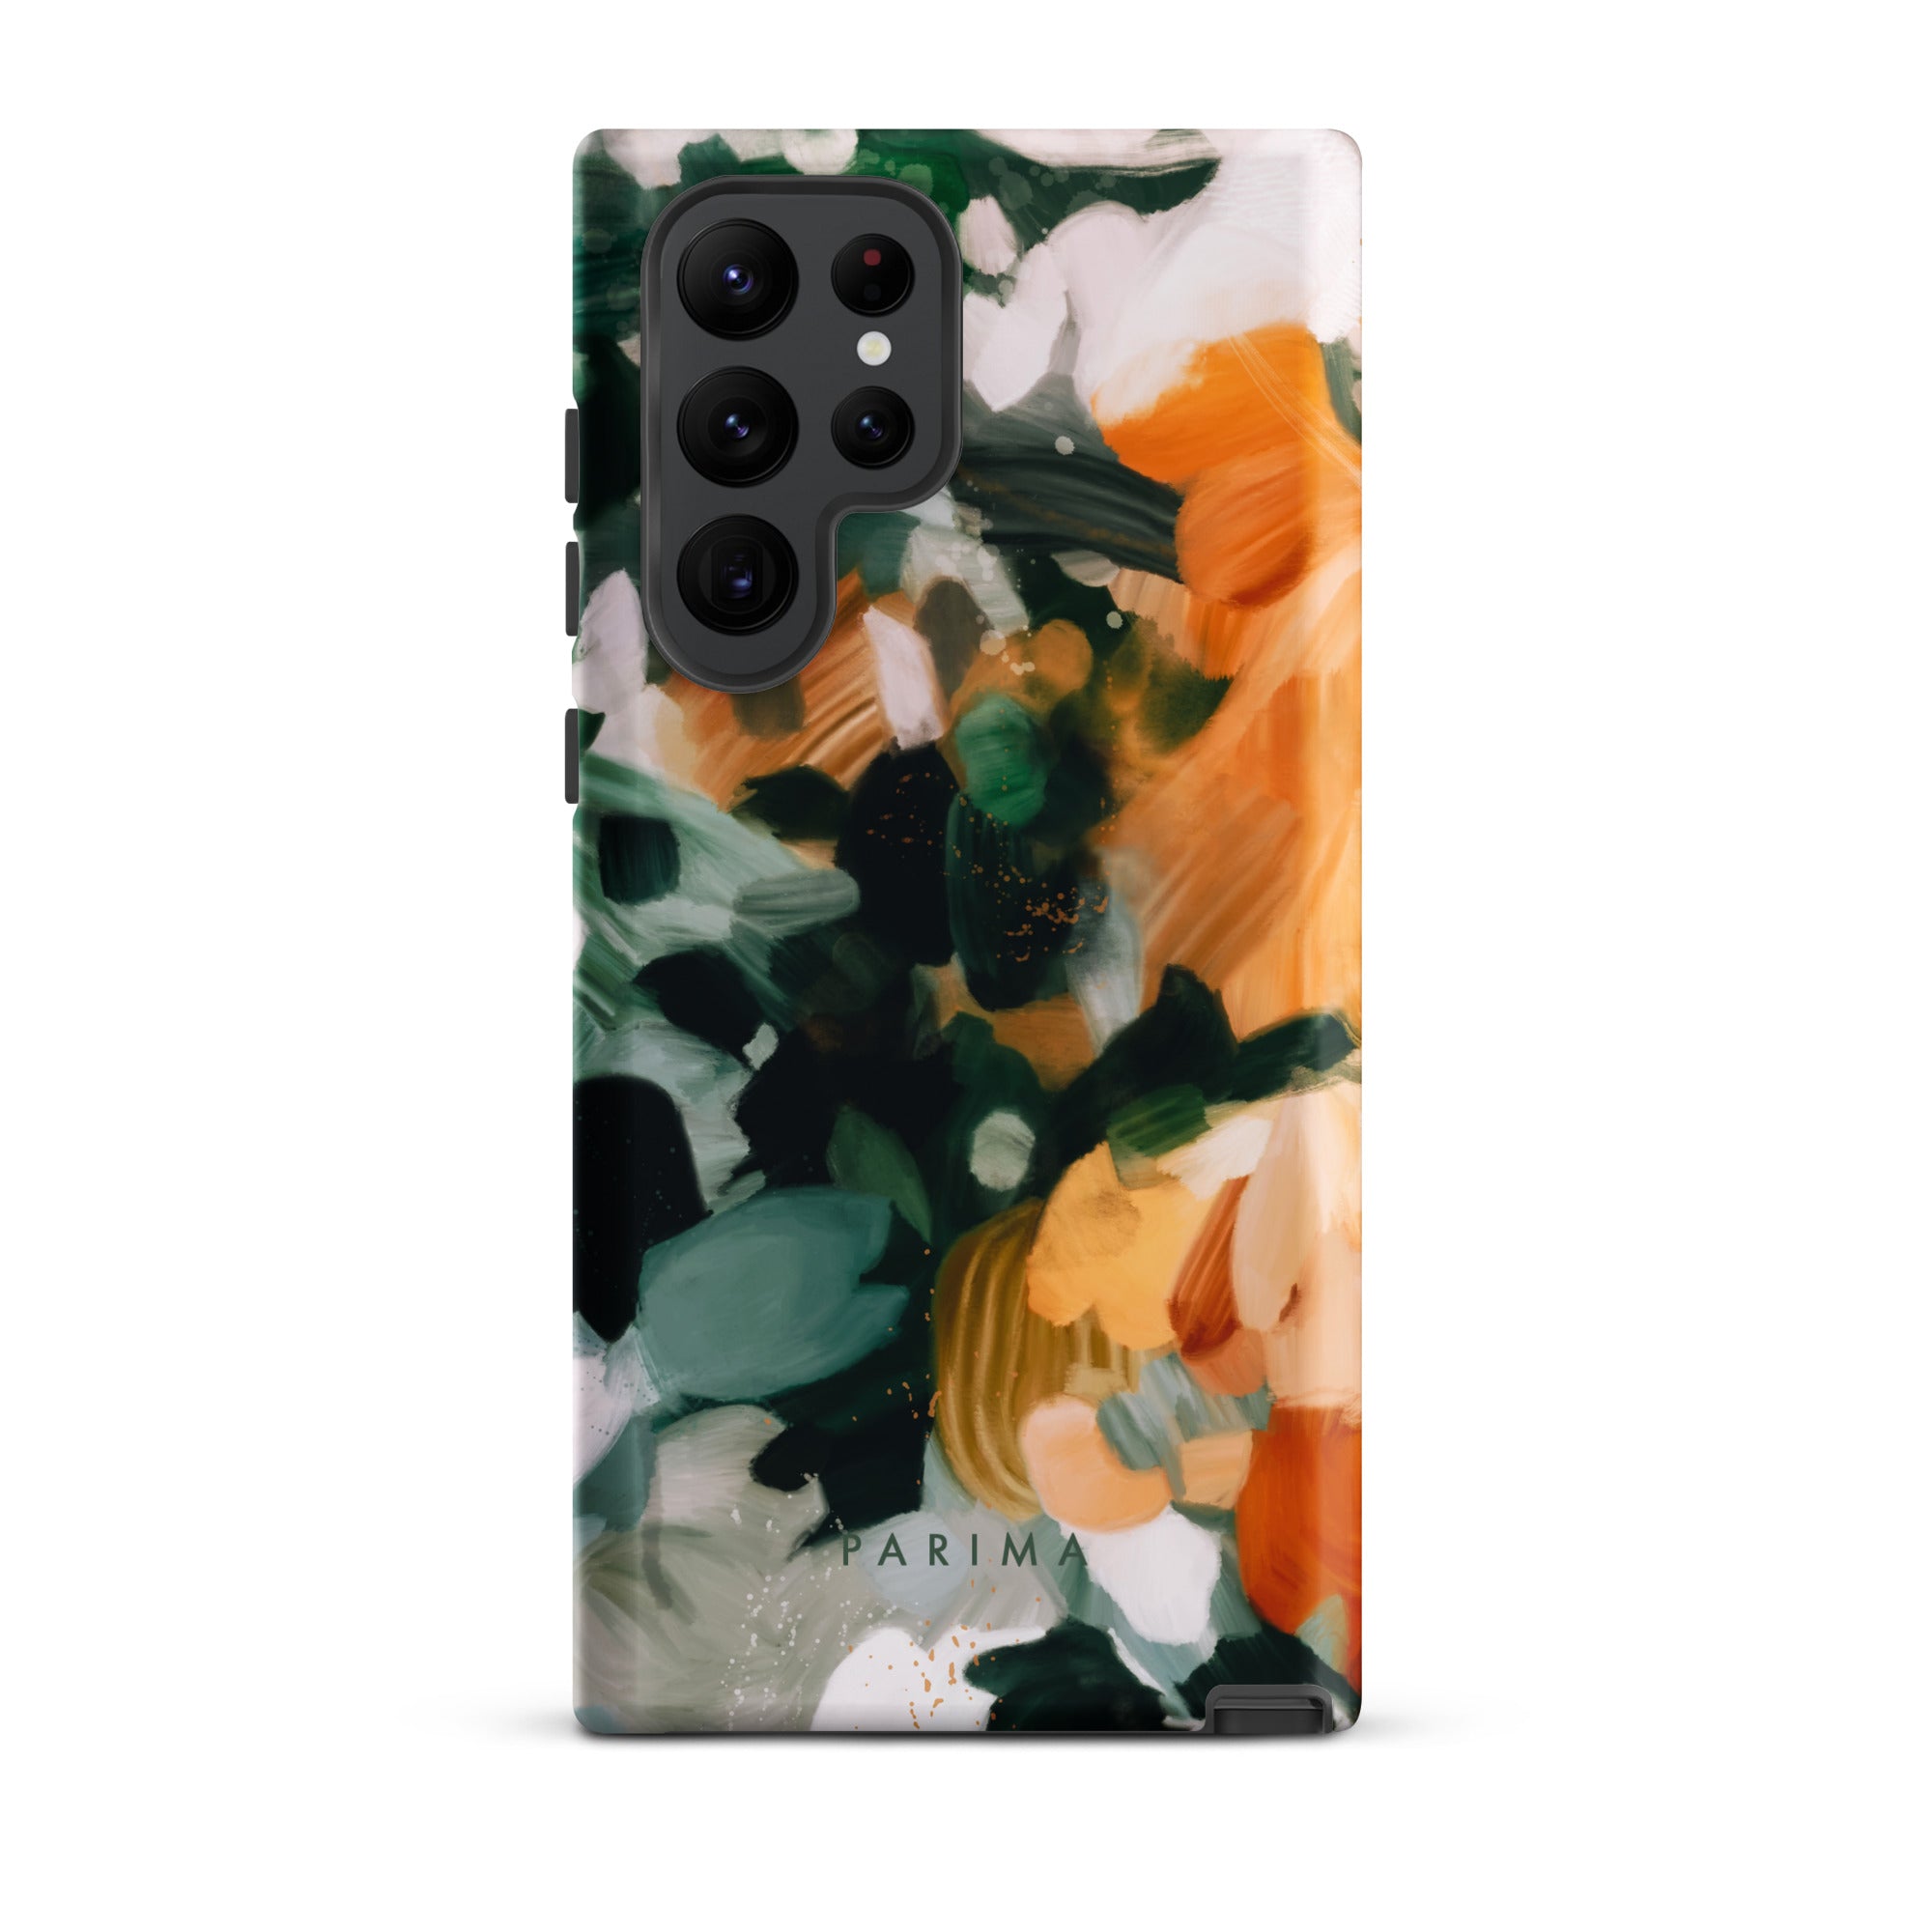 Aspen, green and orange abstract art on Samsung Galaxy S22 Ultra tough case by Parima Studio